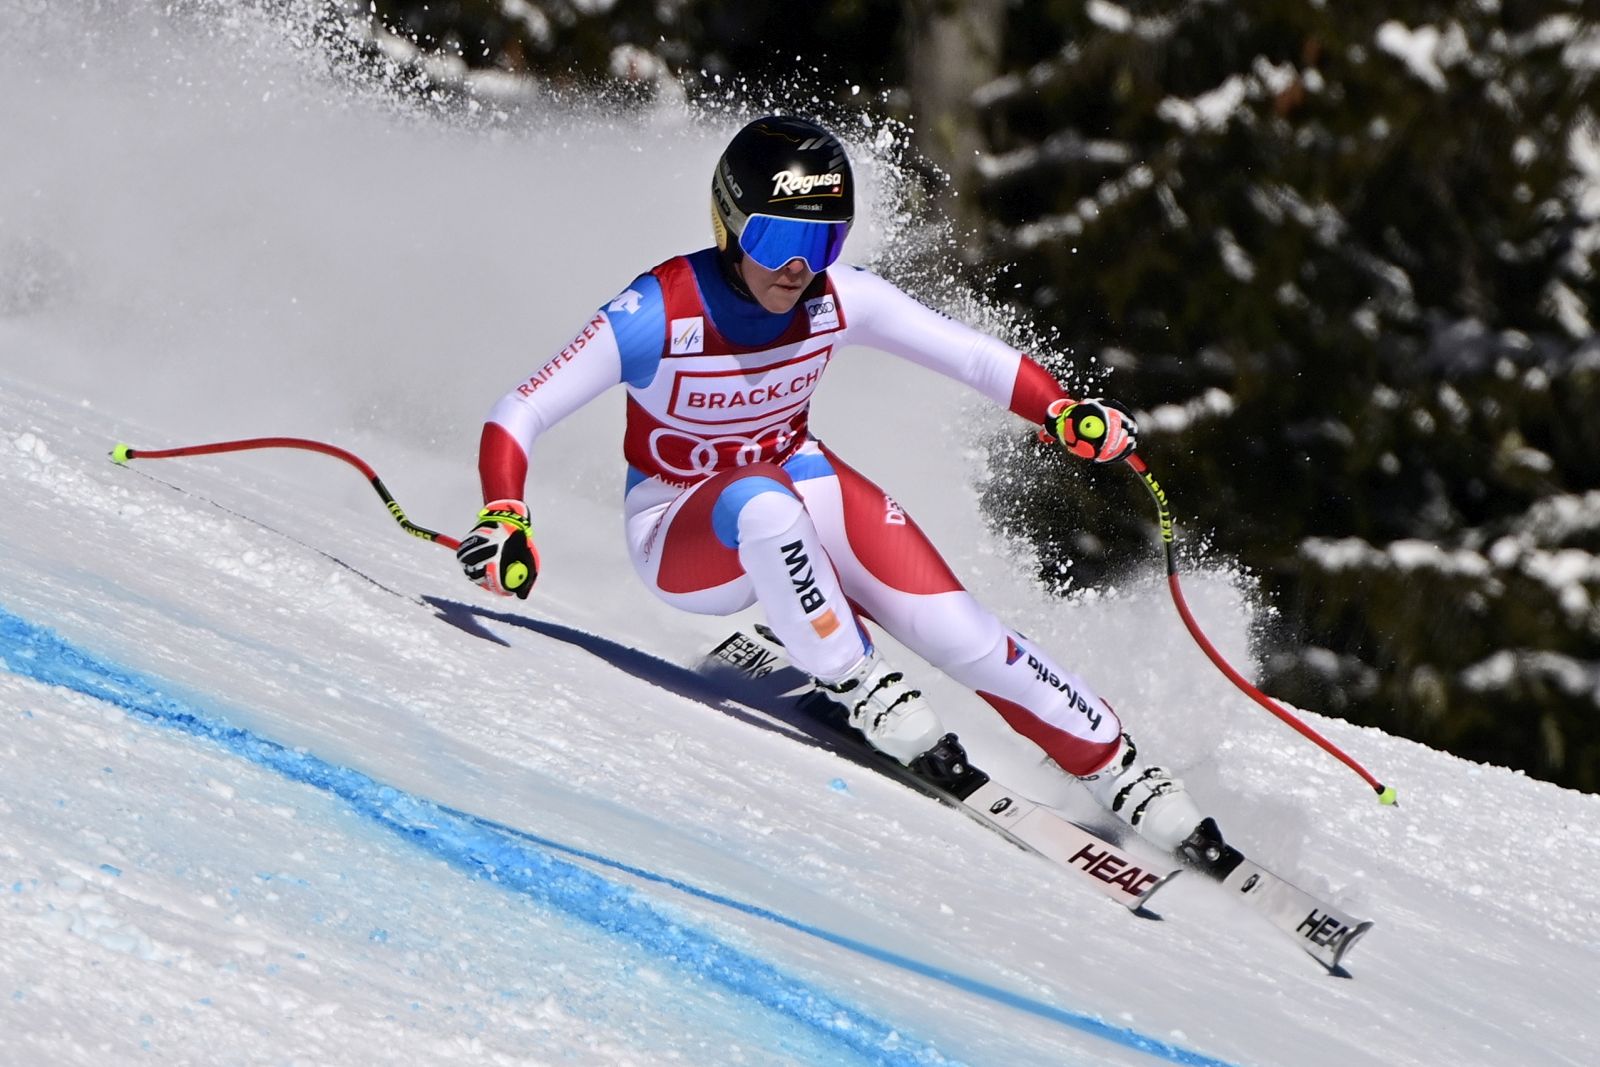 epa08961831 Switzerland's Lara Gut-Behrami in action during the Women's Super G race at the FIS Alpine Ski World Cup in Crans-Montana, Switzerland, 24 January 2021.  EPA/JEAN-CHRISTOPHE BOTT